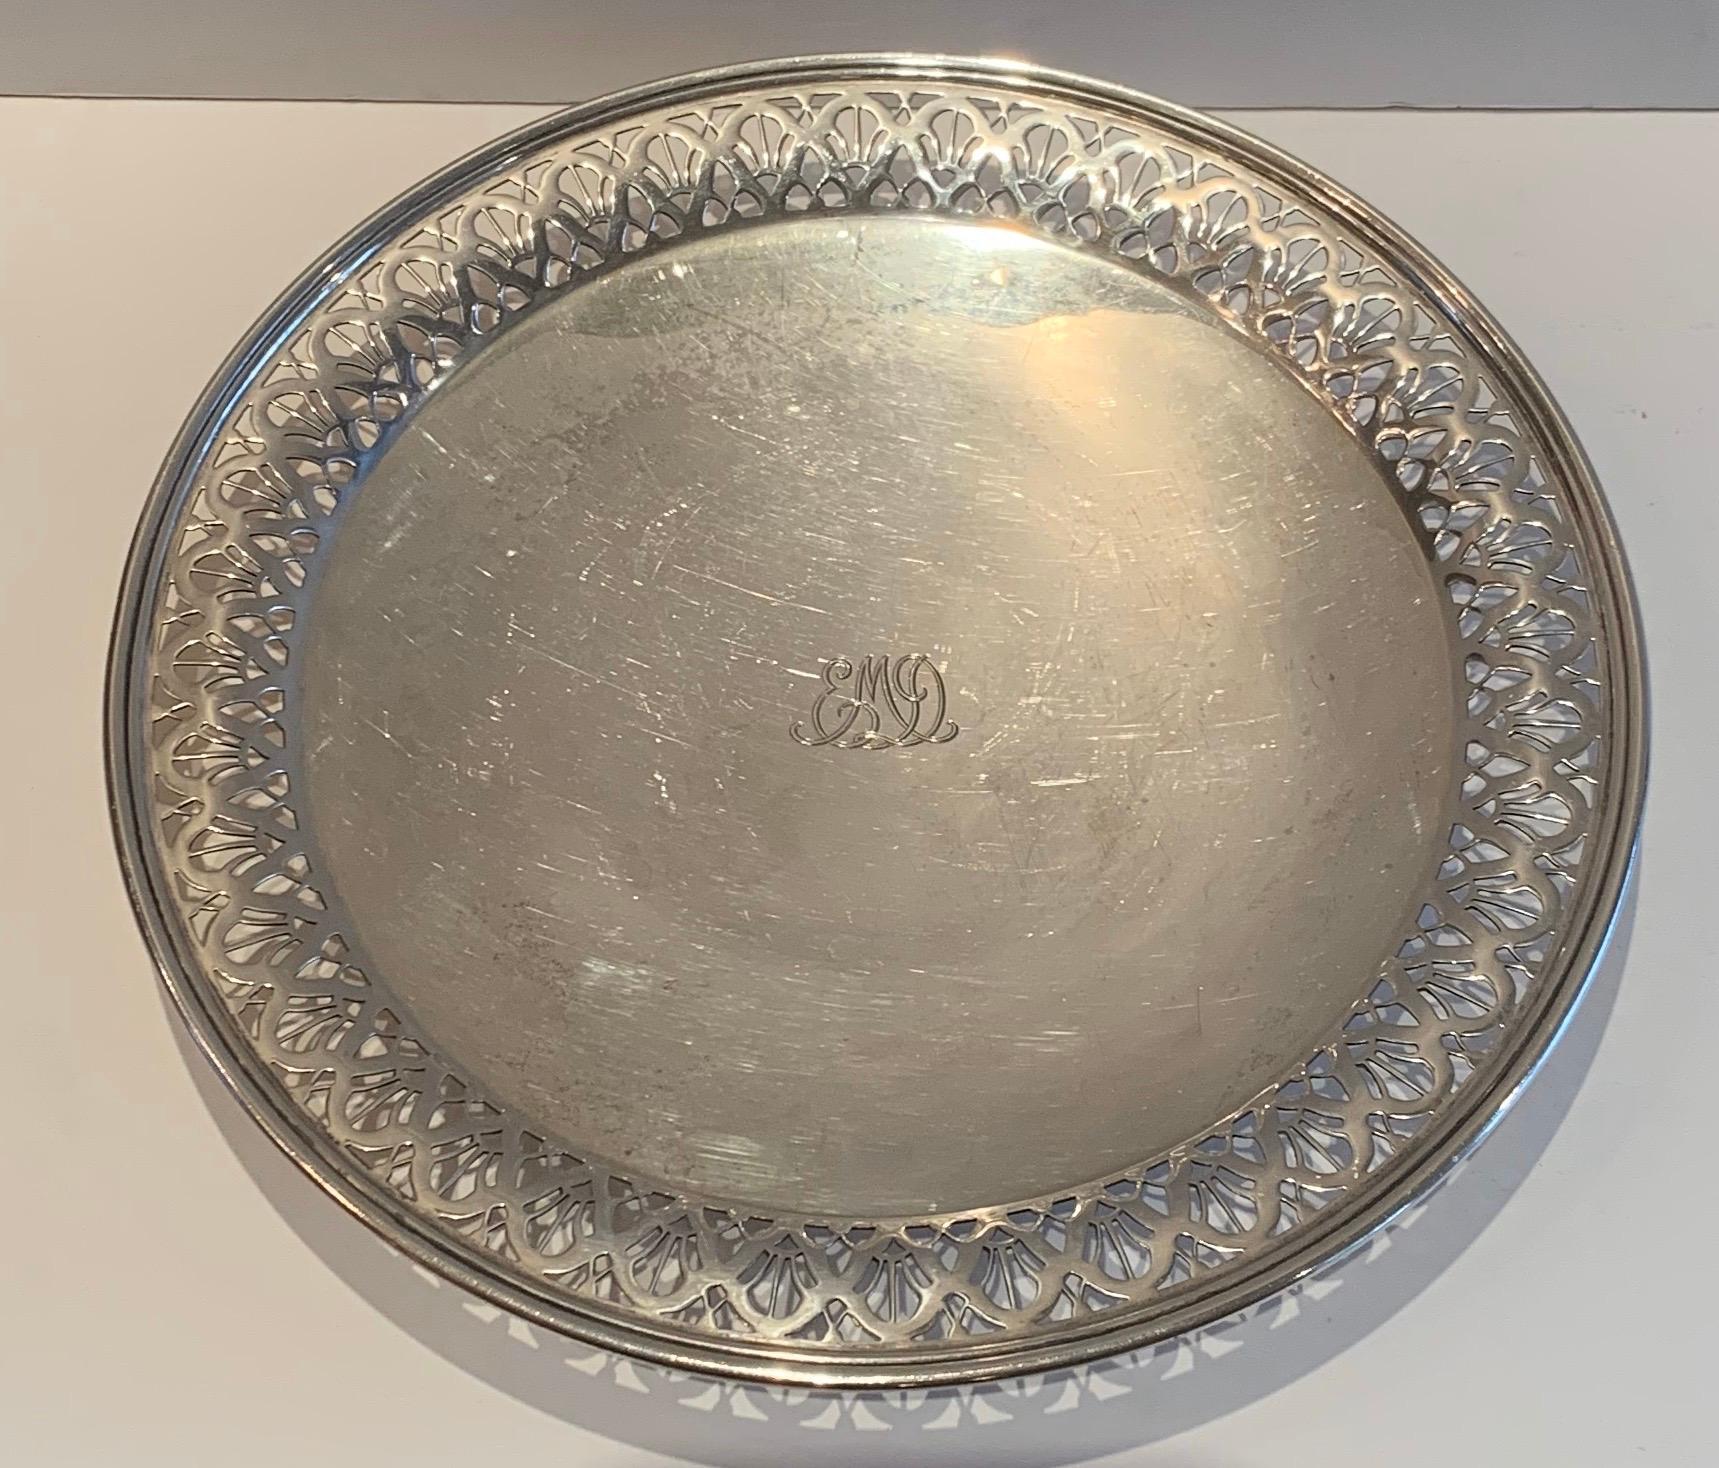 A wonderful Tiffany & Co. sterling silver round regency pierced tray centerpiece platter.